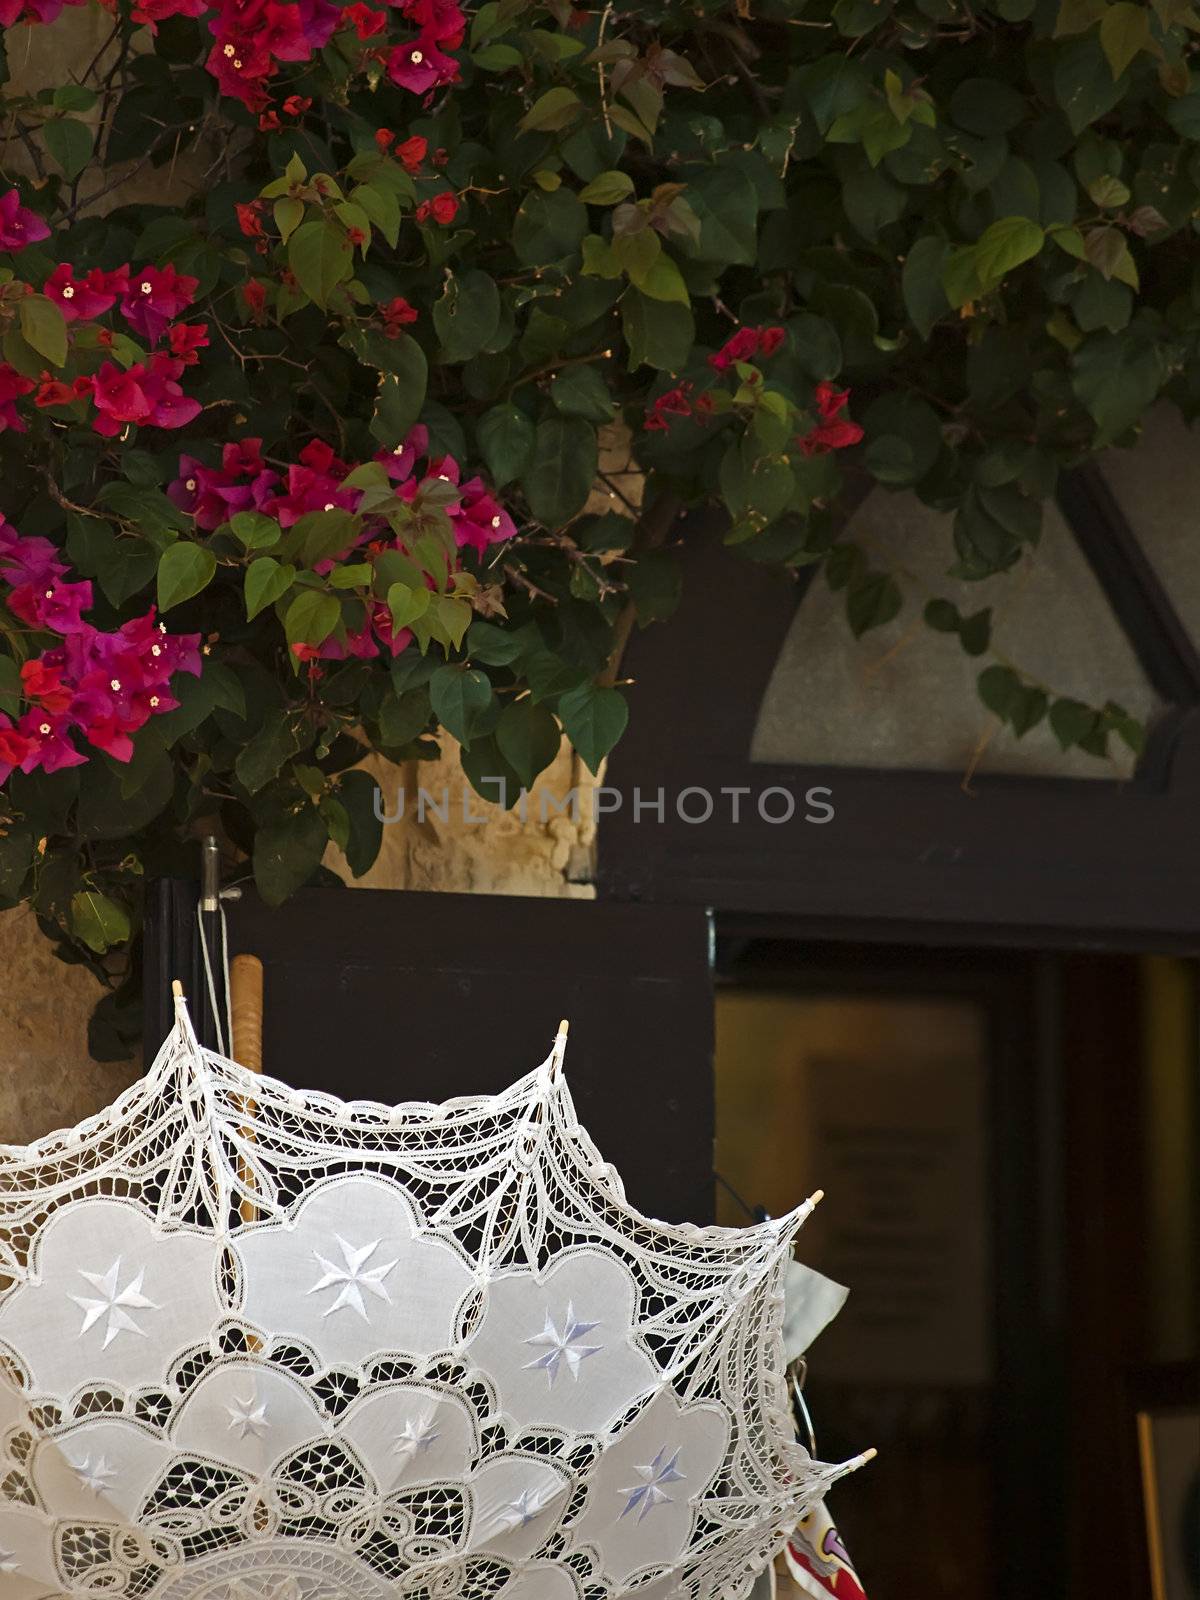 Malta Lace Umbrella by PhotoWorks